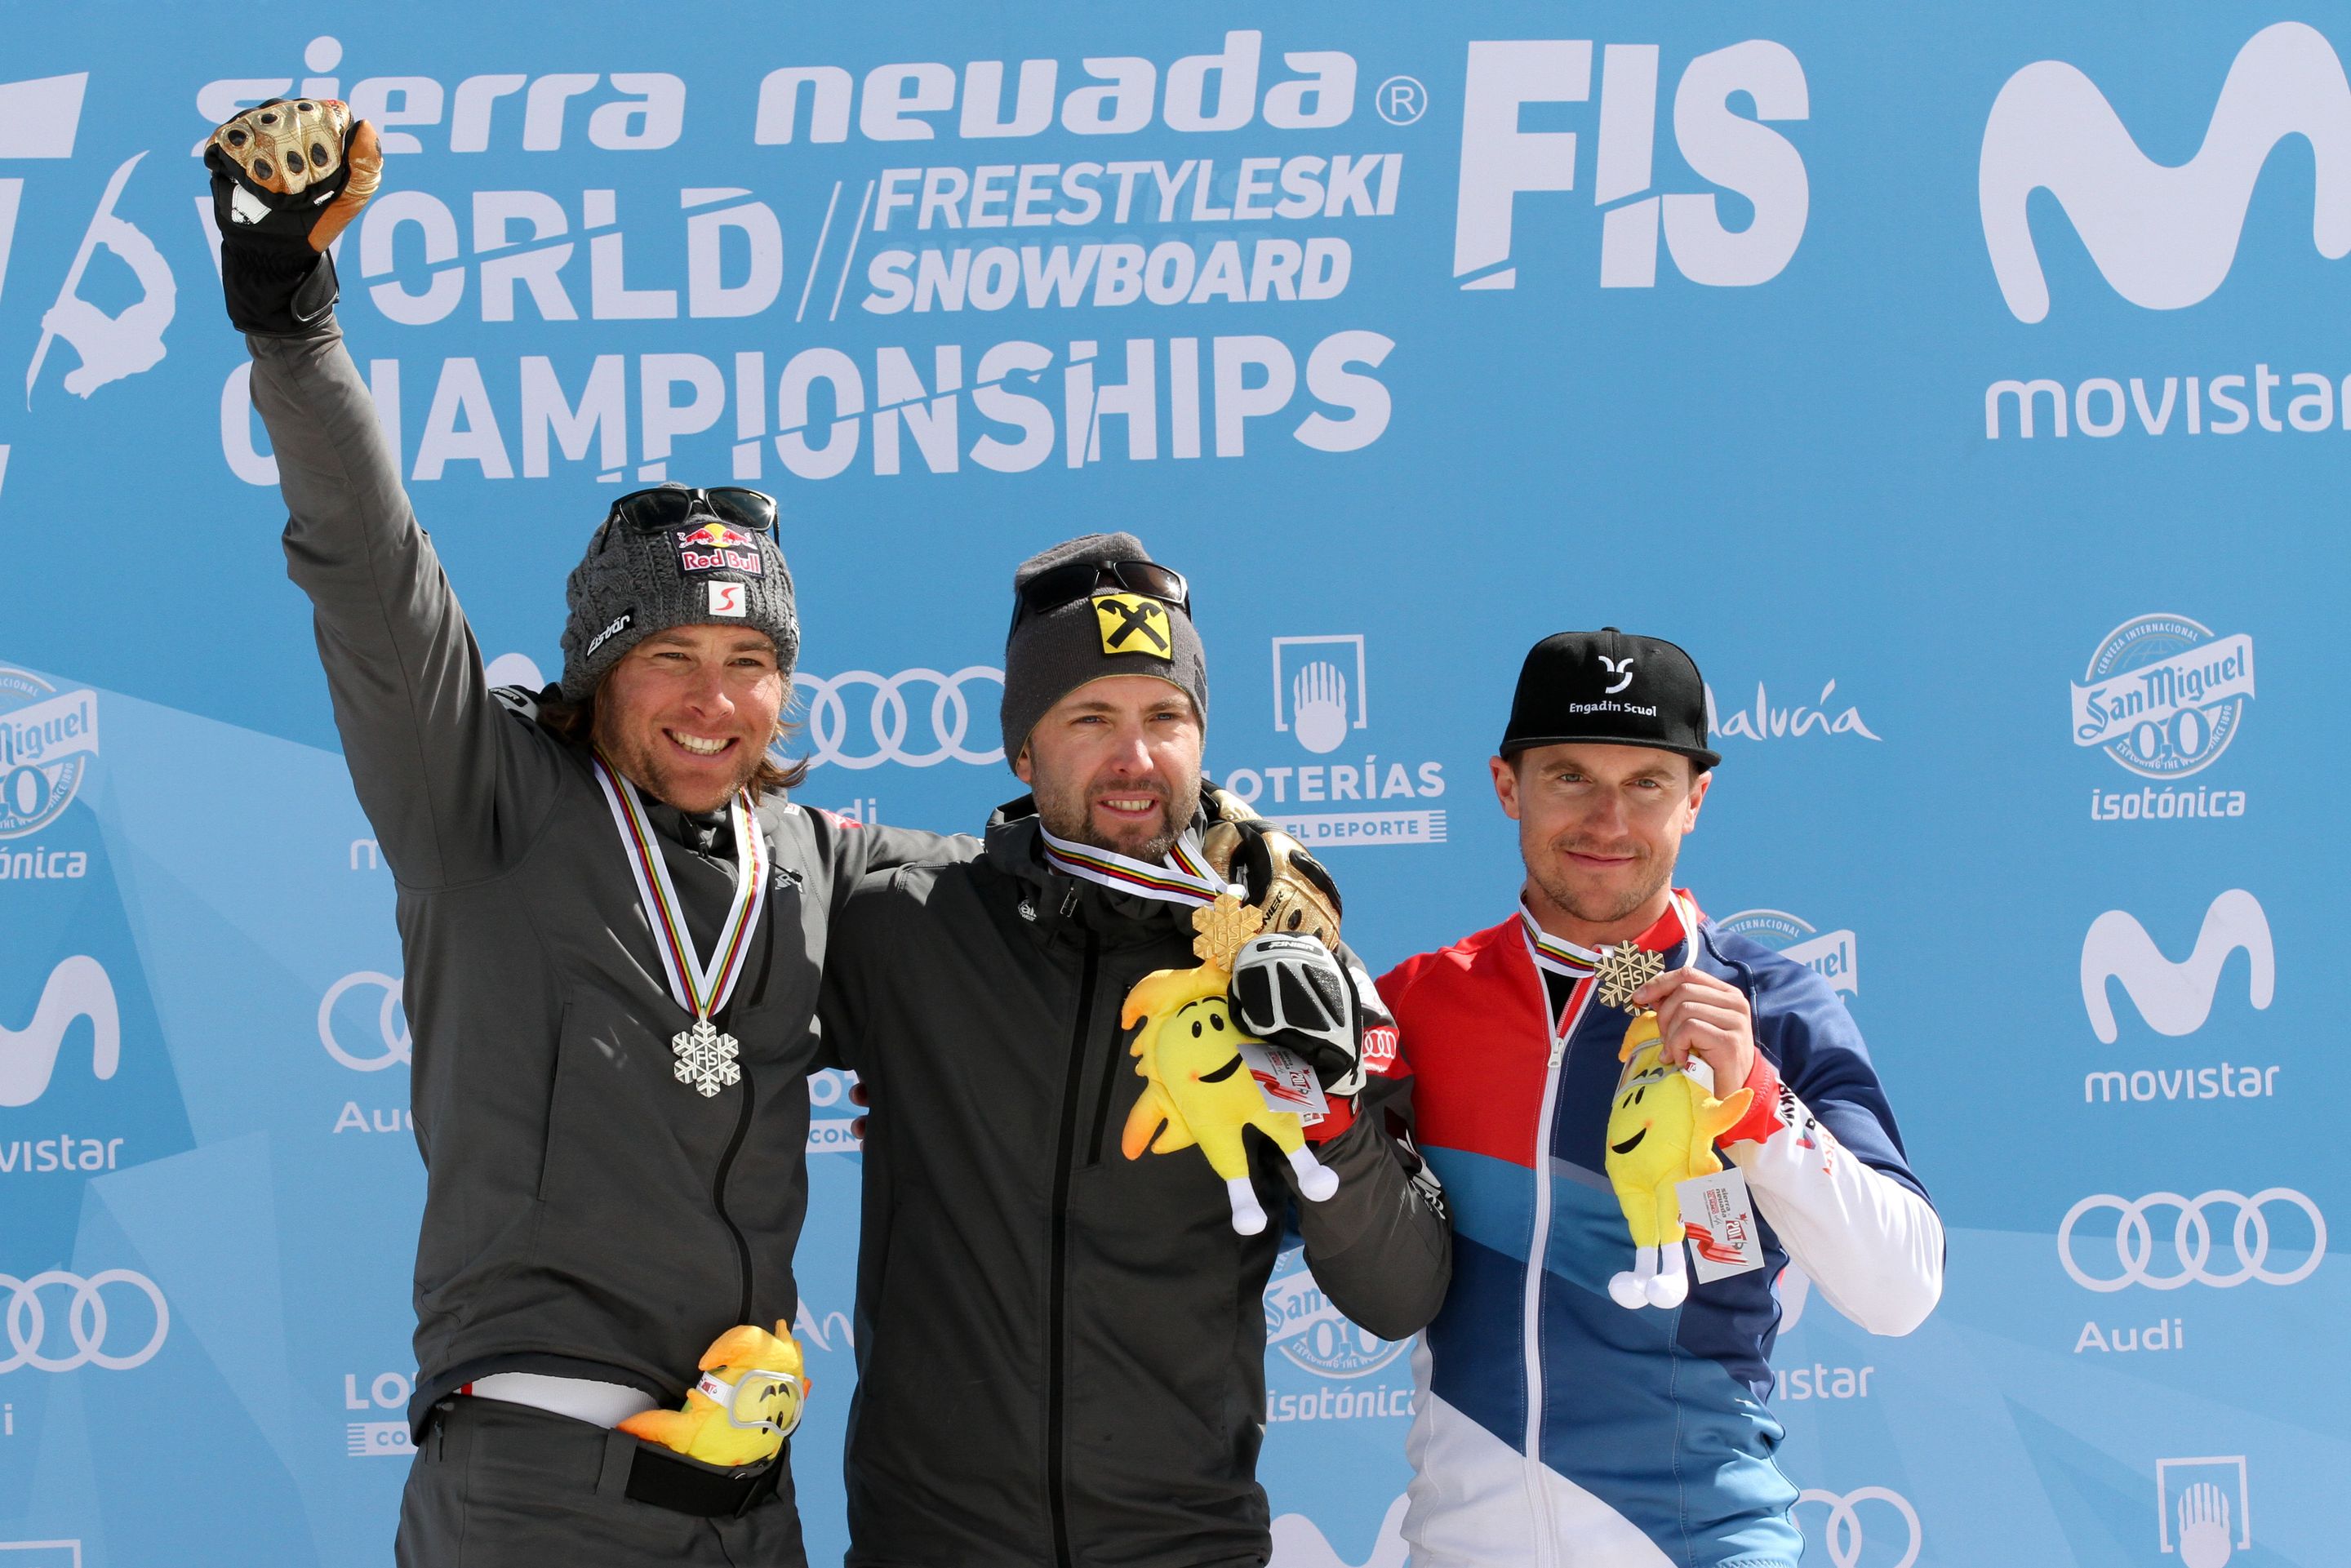 Men's Podium PGS Sierra Nevada 2017 FIS Snowboard World Championships - 2nd Benjamin Karl (AUT), 1st Andreas Prommegger (AUT), 3rd Nevin Galmarini (SUI)